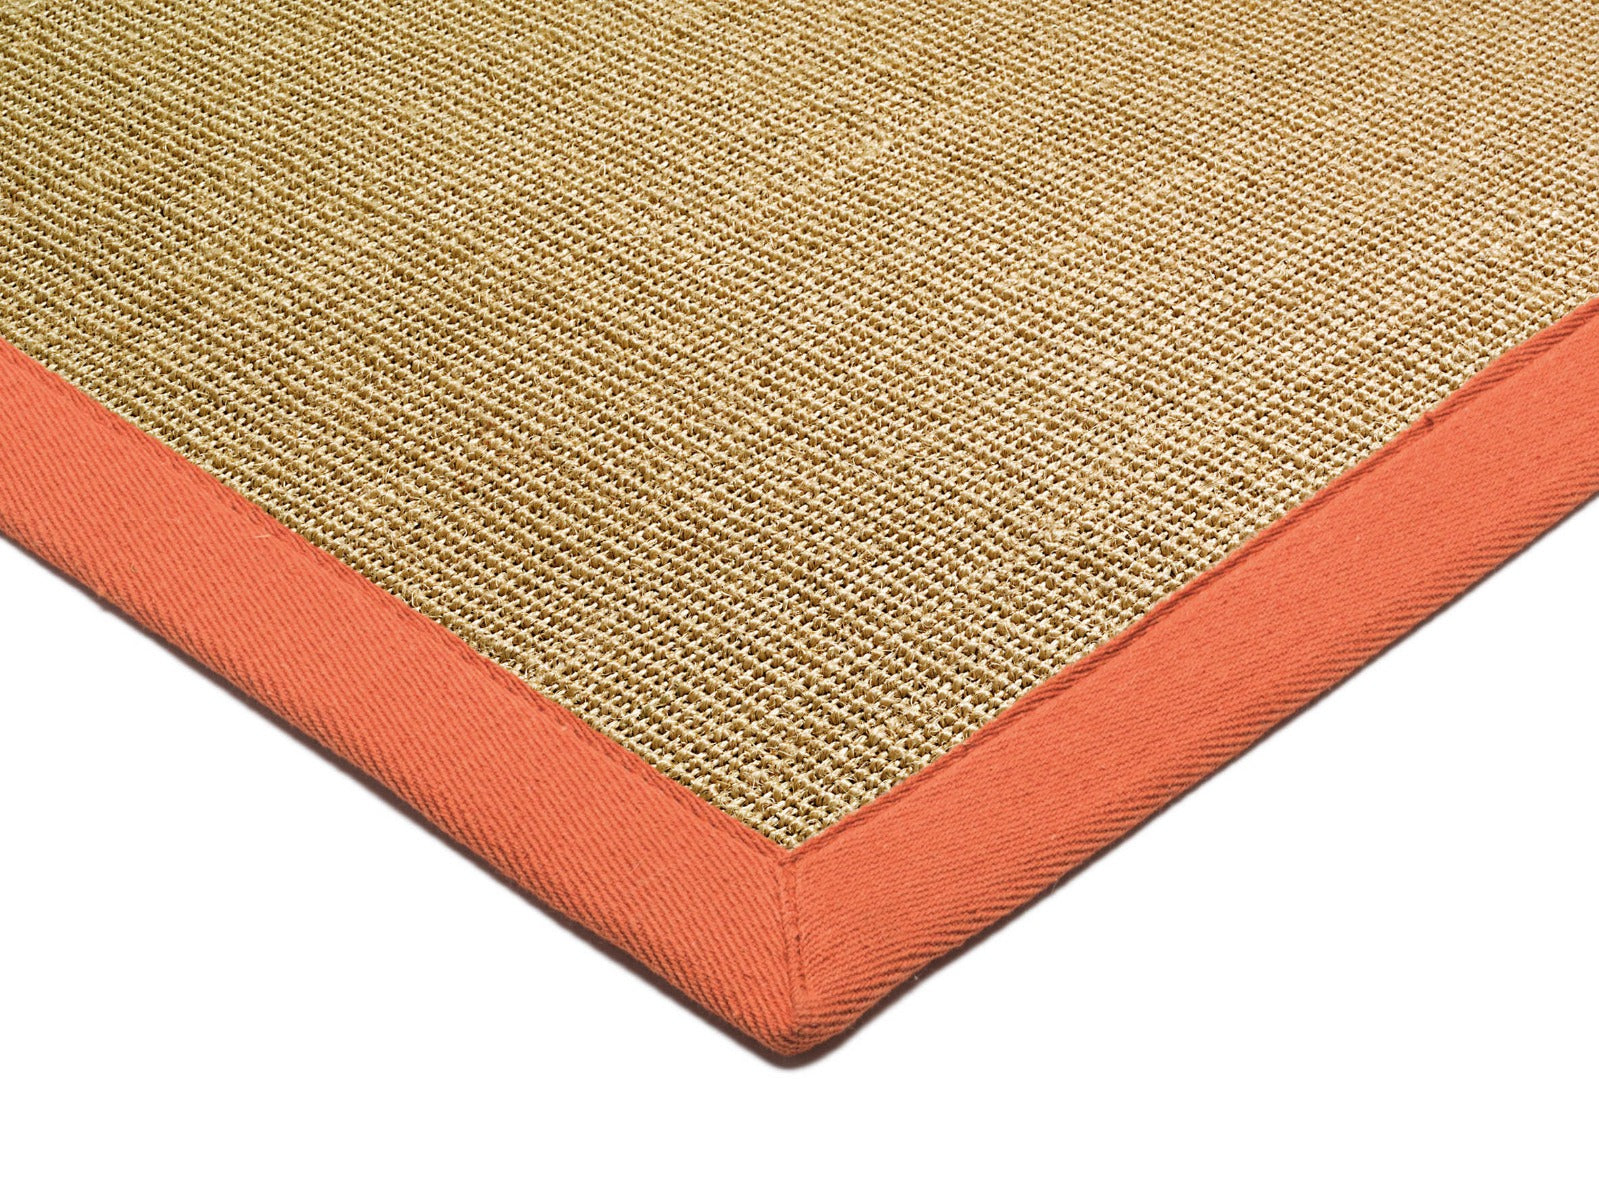 Bordered Sisal Rug Linen with Orange Border